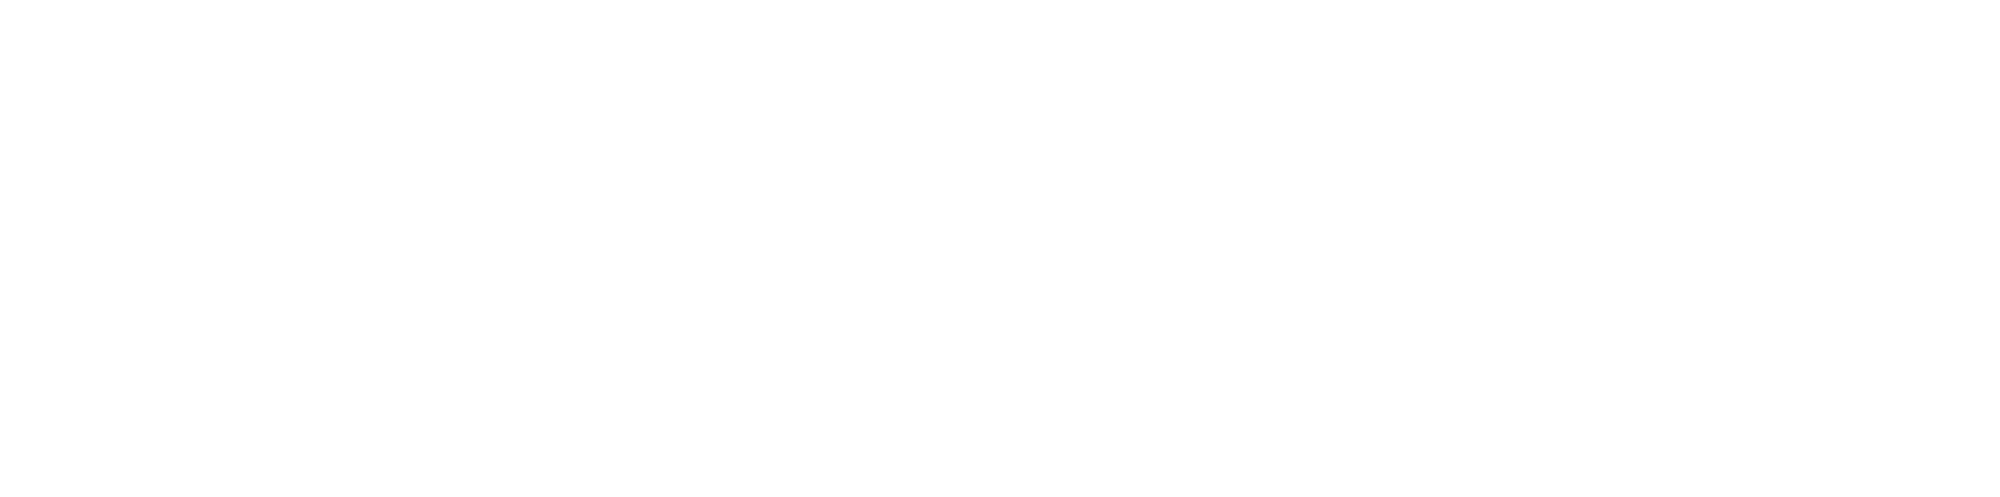 Michelle Sargent, LMFT